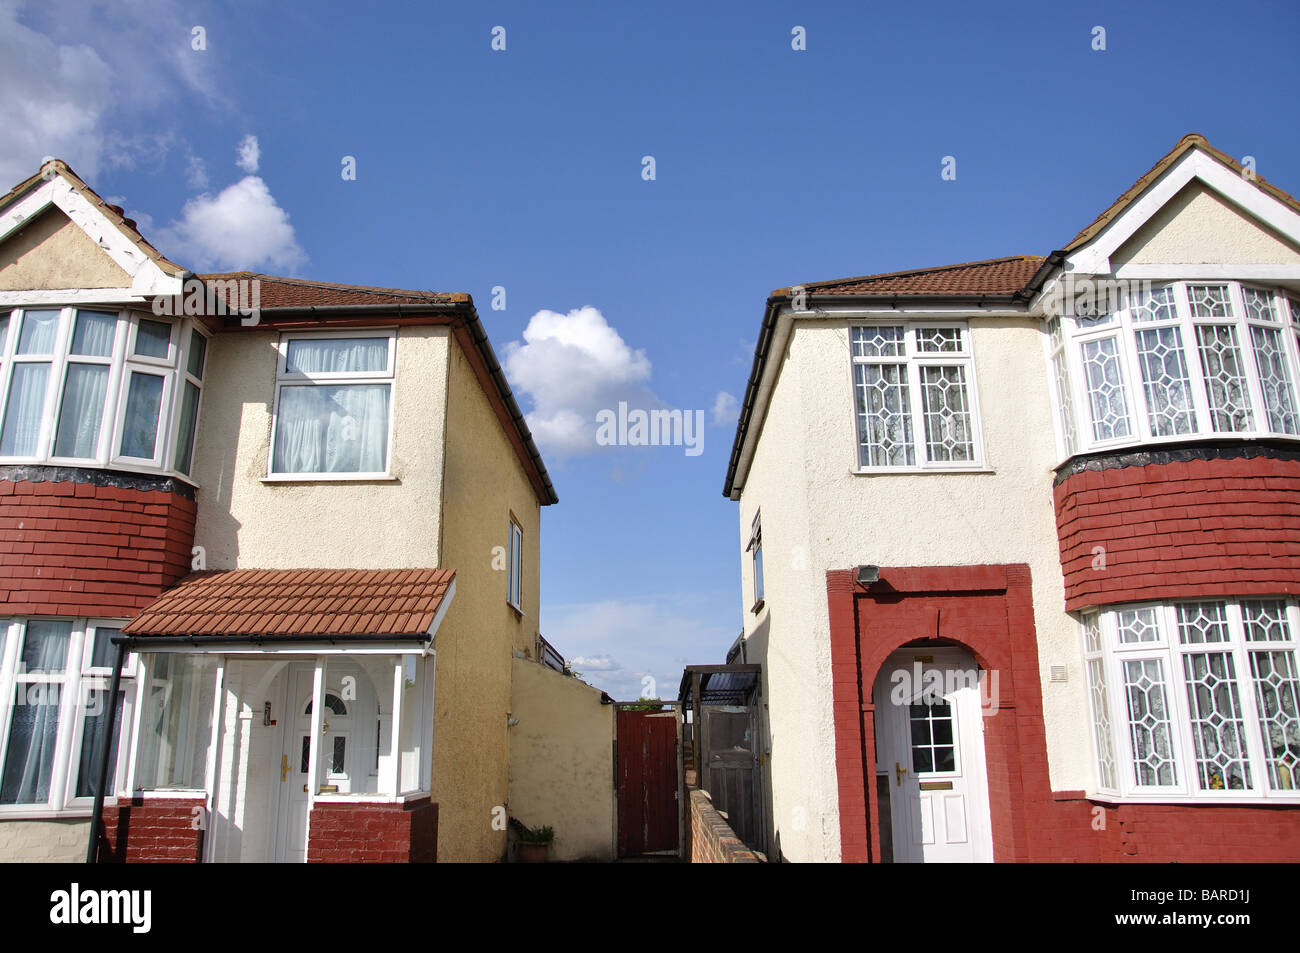 Maisons typiques, Myrtle Avenue, Feltham, Greater London, Angleterre, Royaume-Uni Banque D'Images